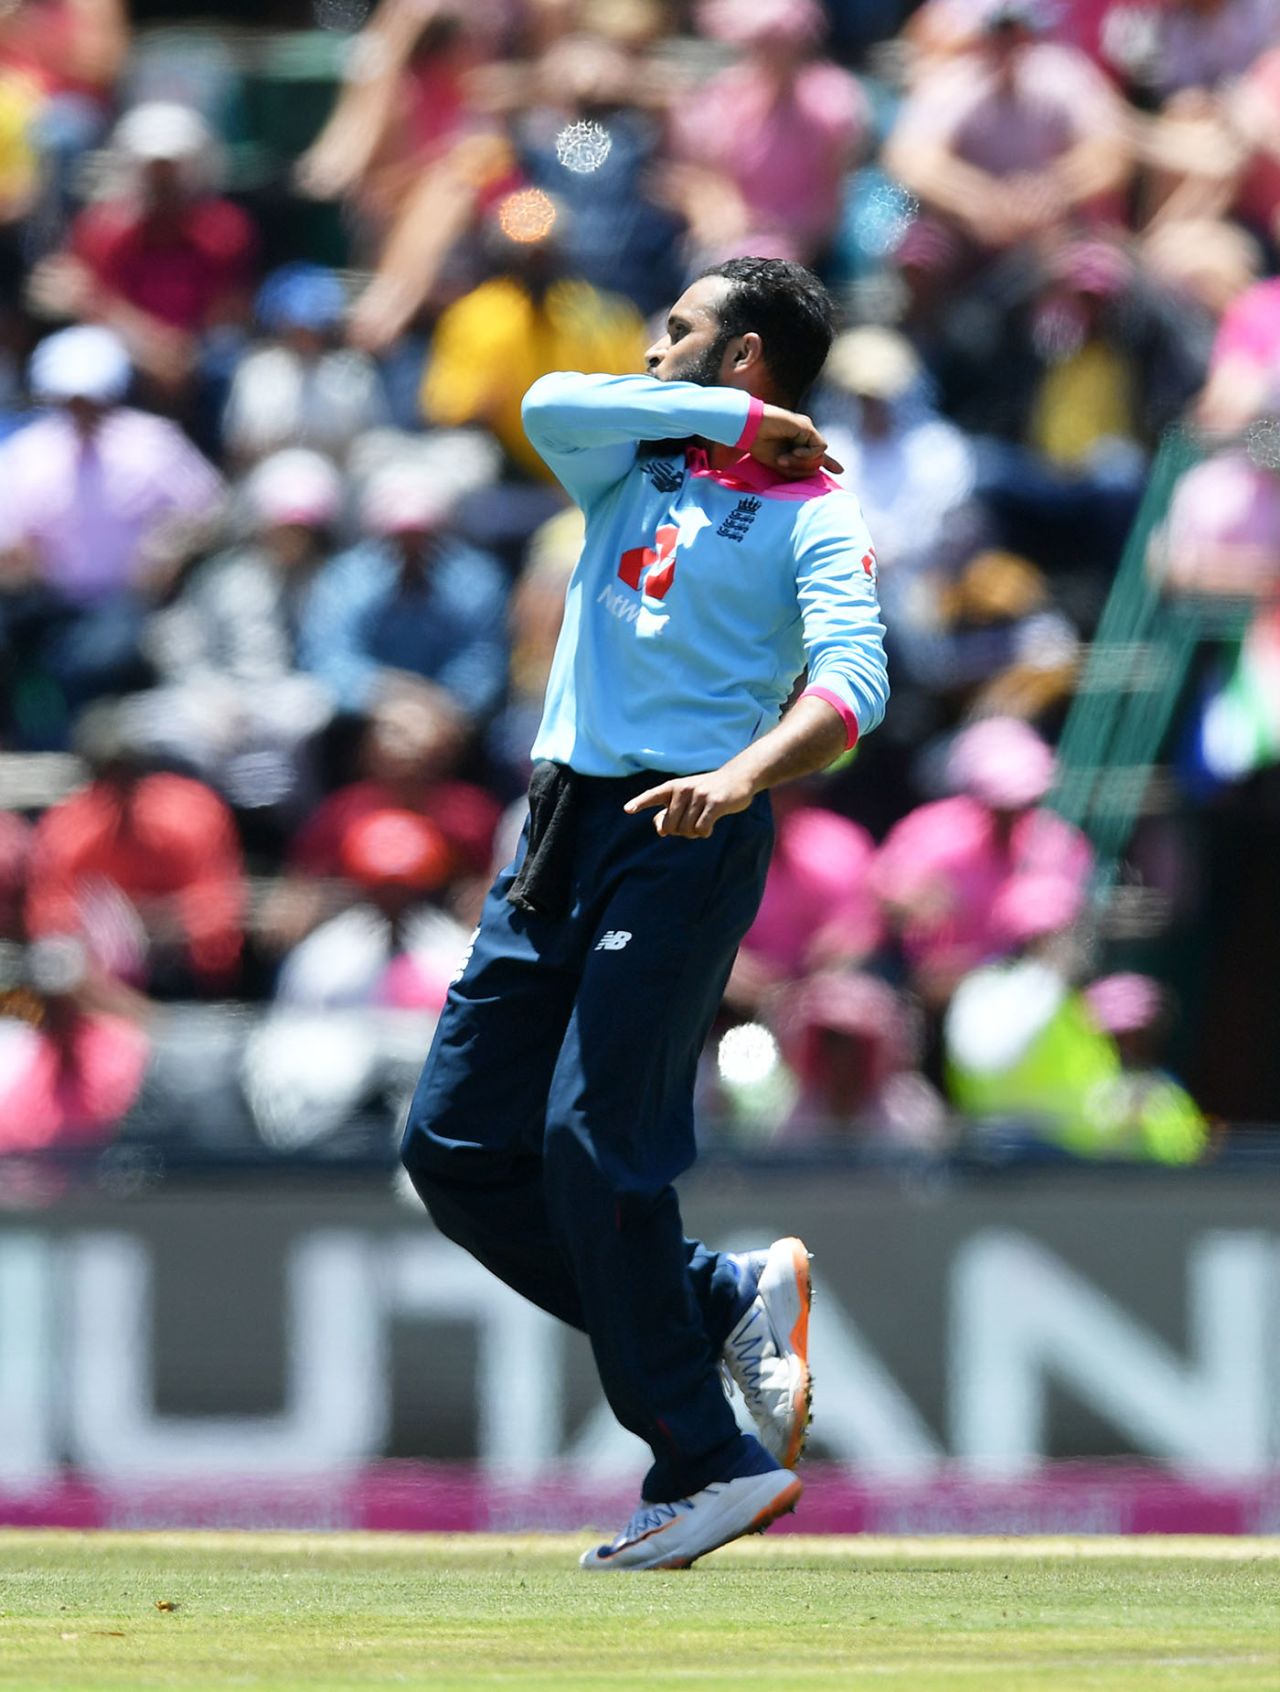 Adil Rashid struck again to remove Quinton de Kock, South Africa v England, 3rd ODI, Johannesburg, February 9, 2019